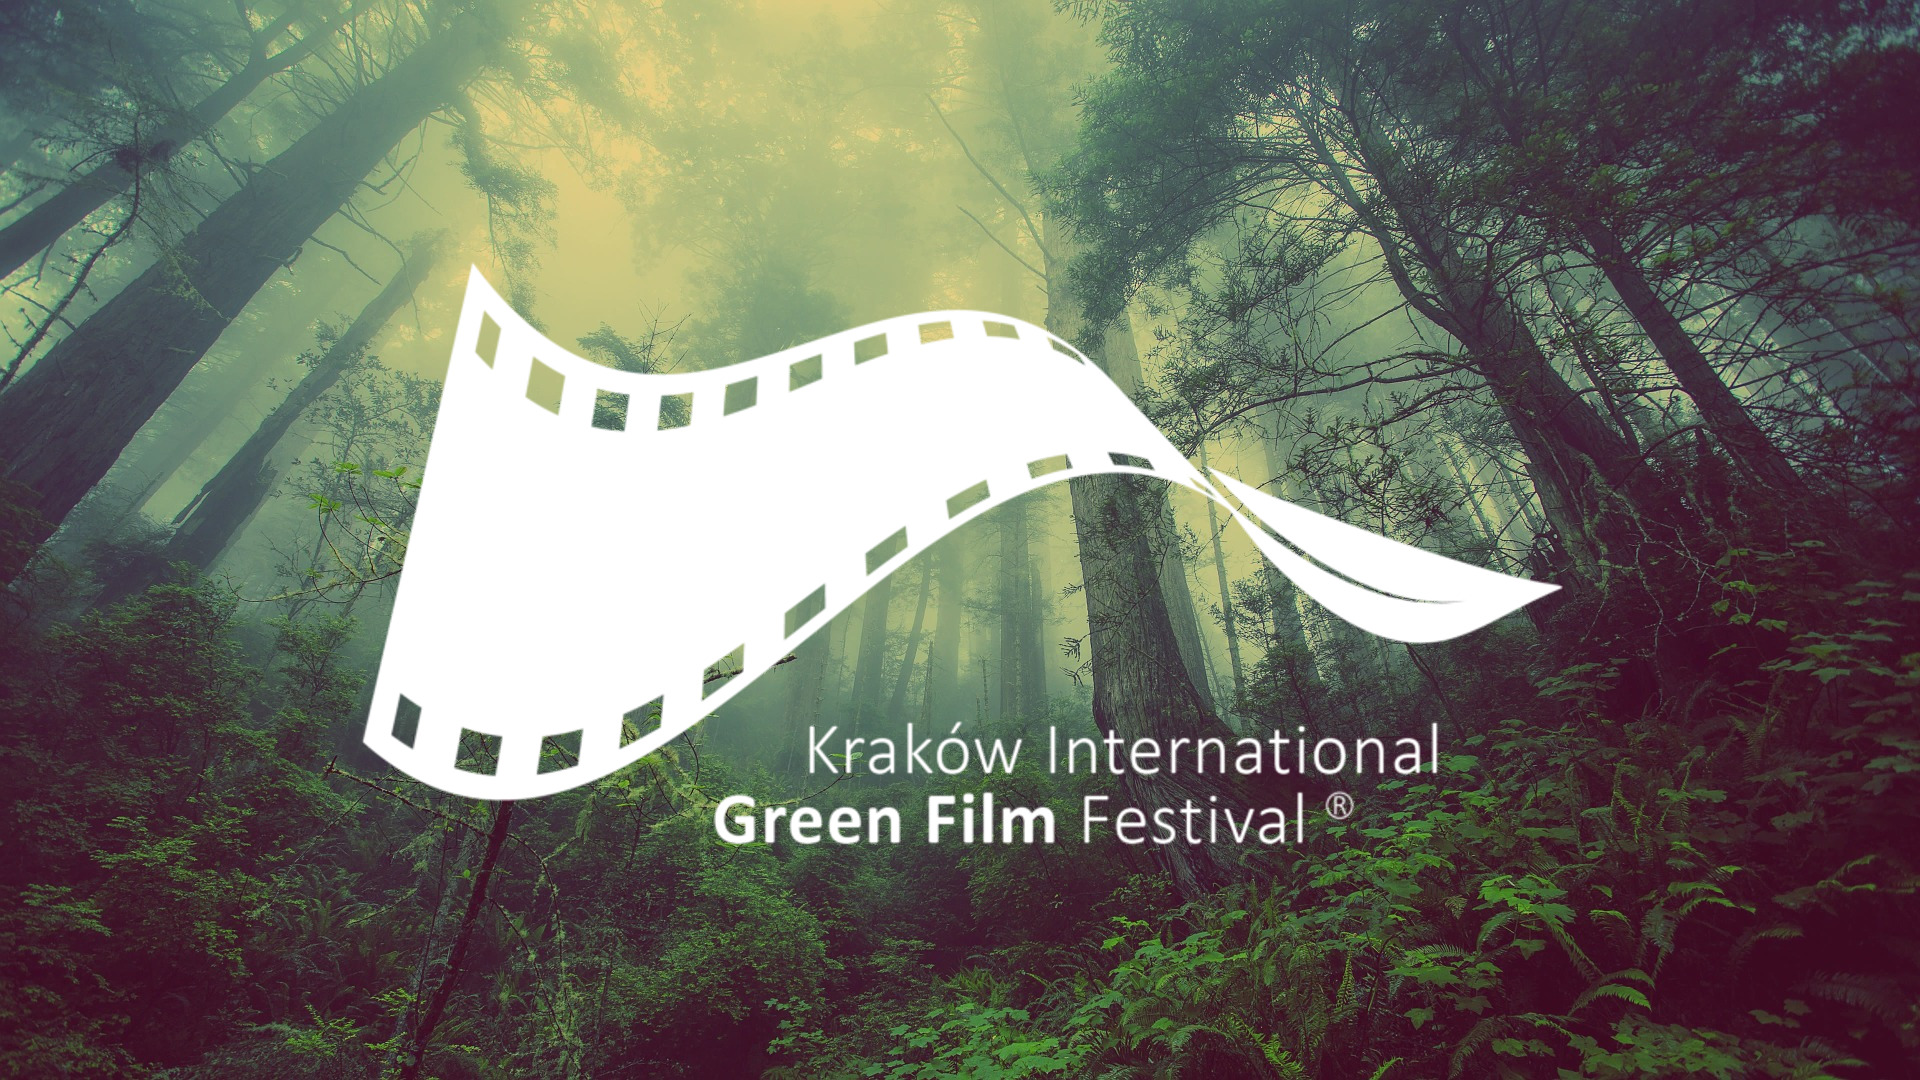 Kraków International Green Film Festival